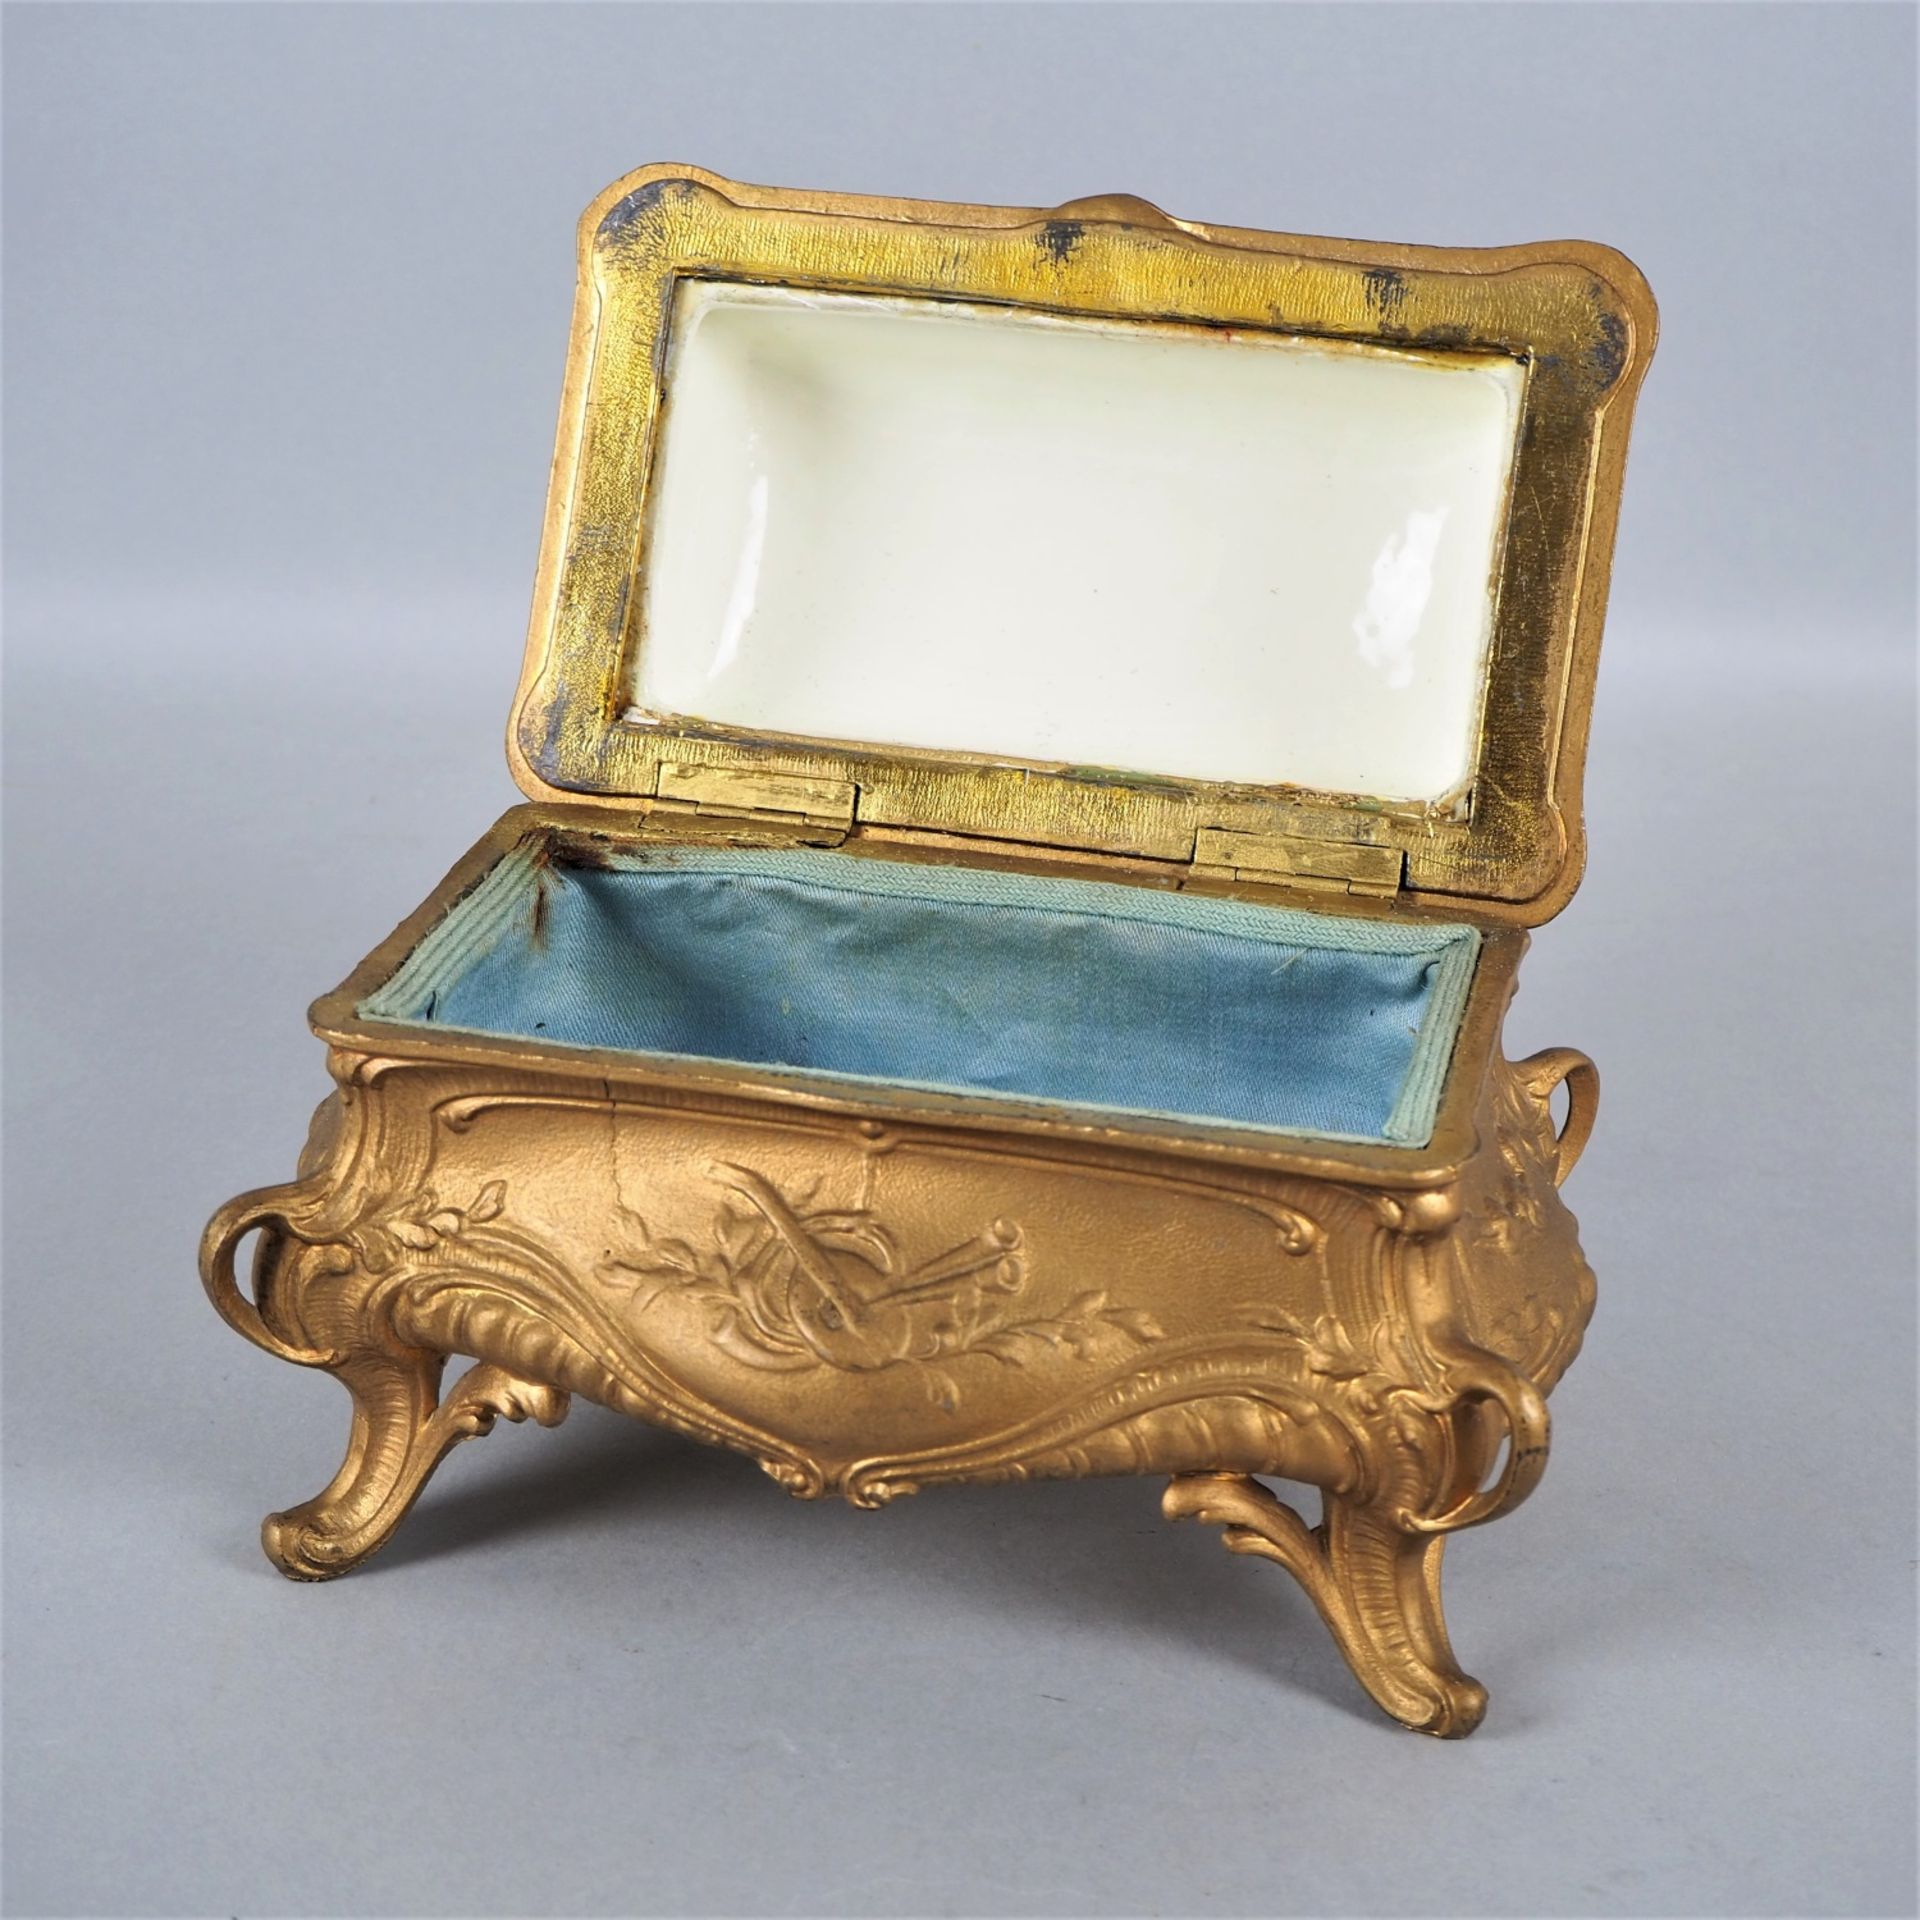 Art nouveau jewelry box, around 1900 - Image 2 of 3